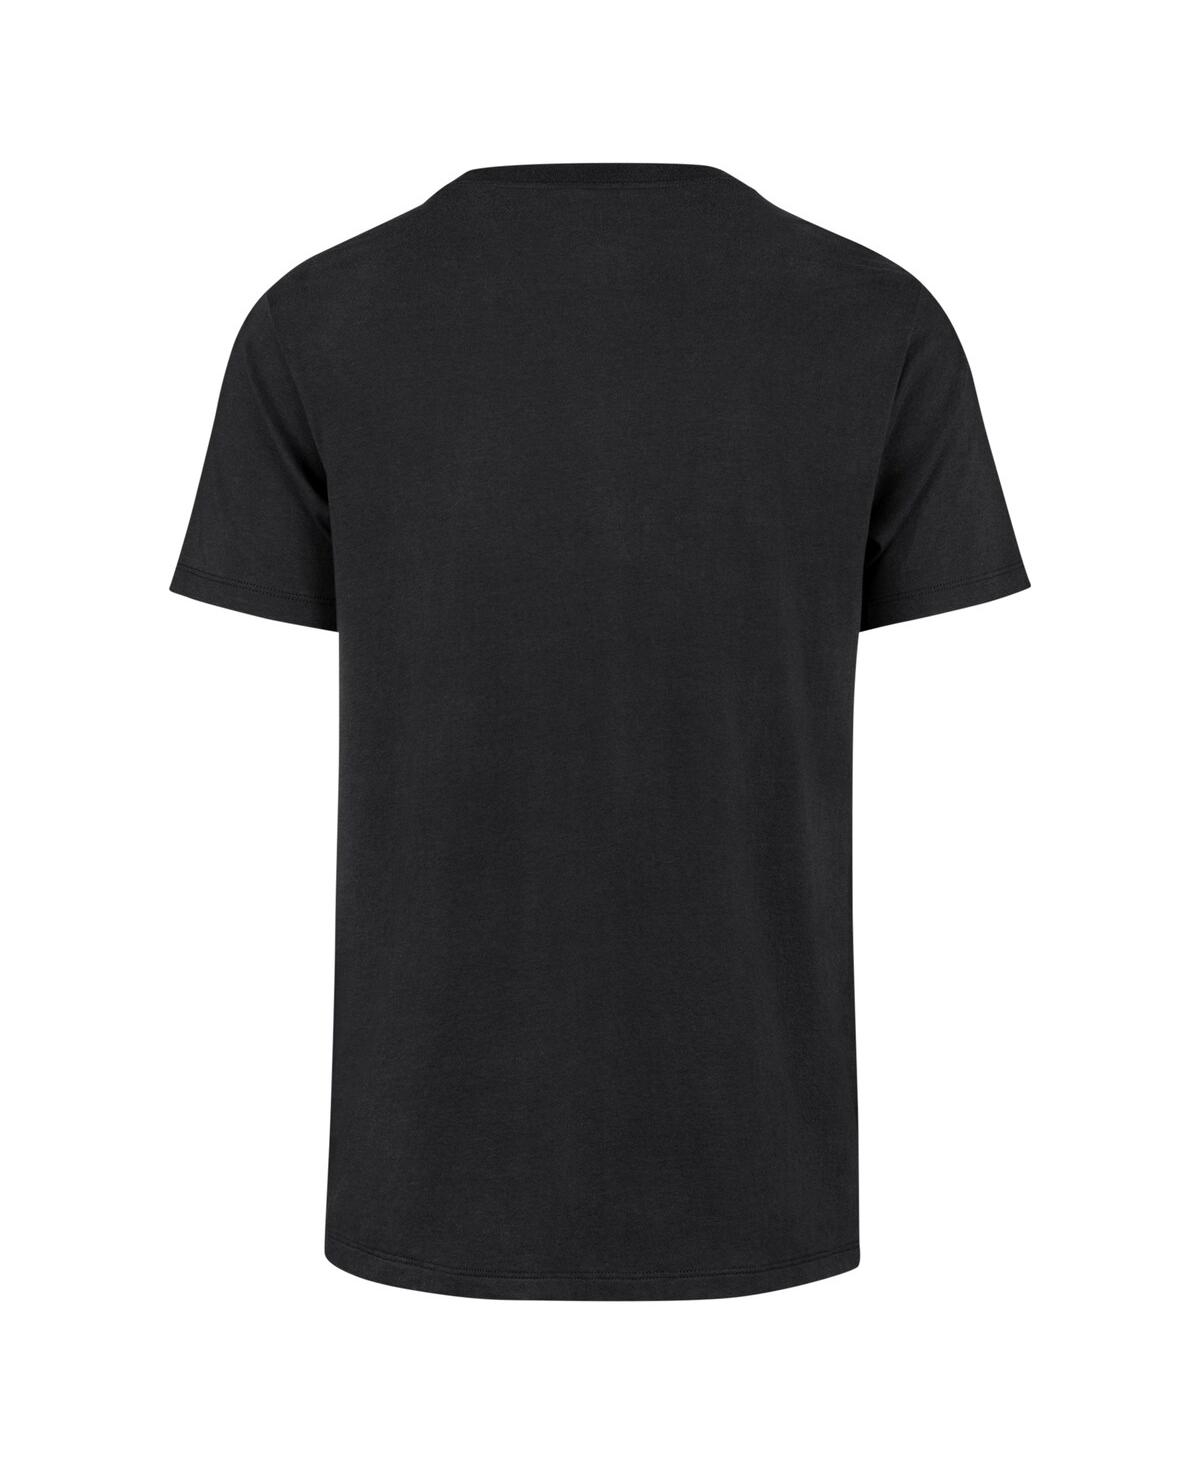 Shop 47 Brand Men's ' Black Distressed Miami Dolphins Amplify Franklin T-shirt